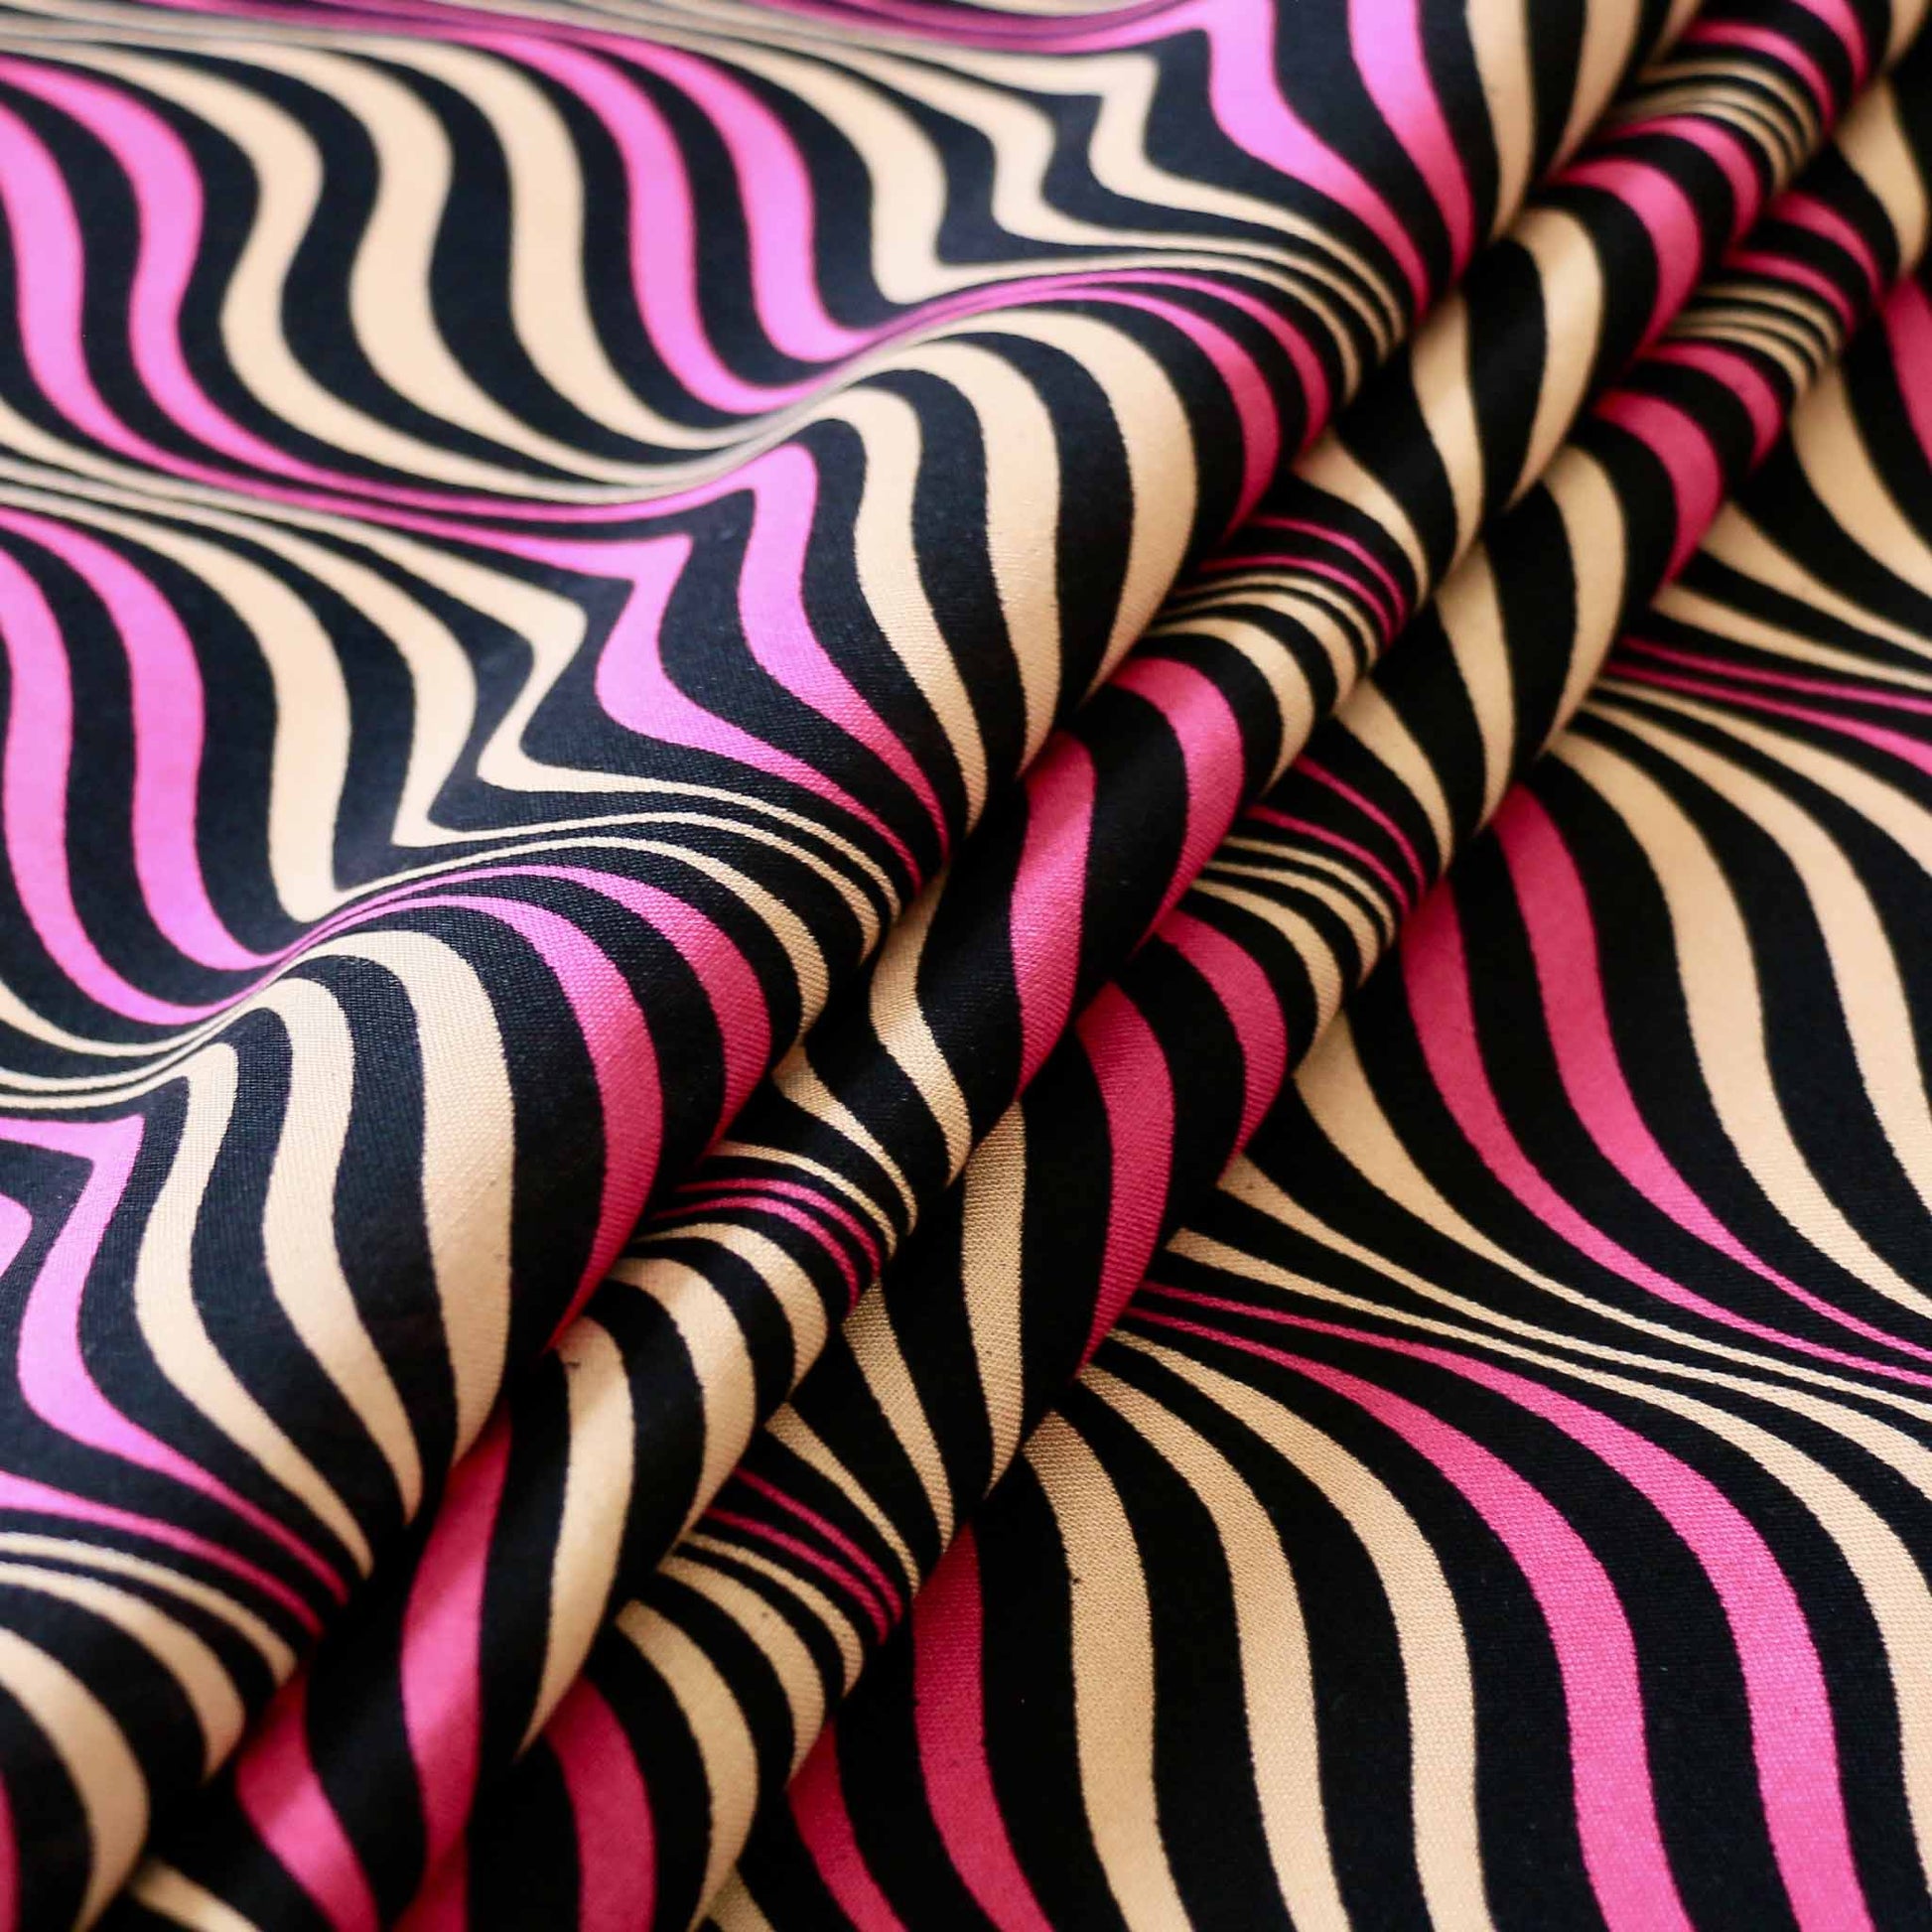 folded geometric pattern black purple and beige viscose challis dressmaking rayon